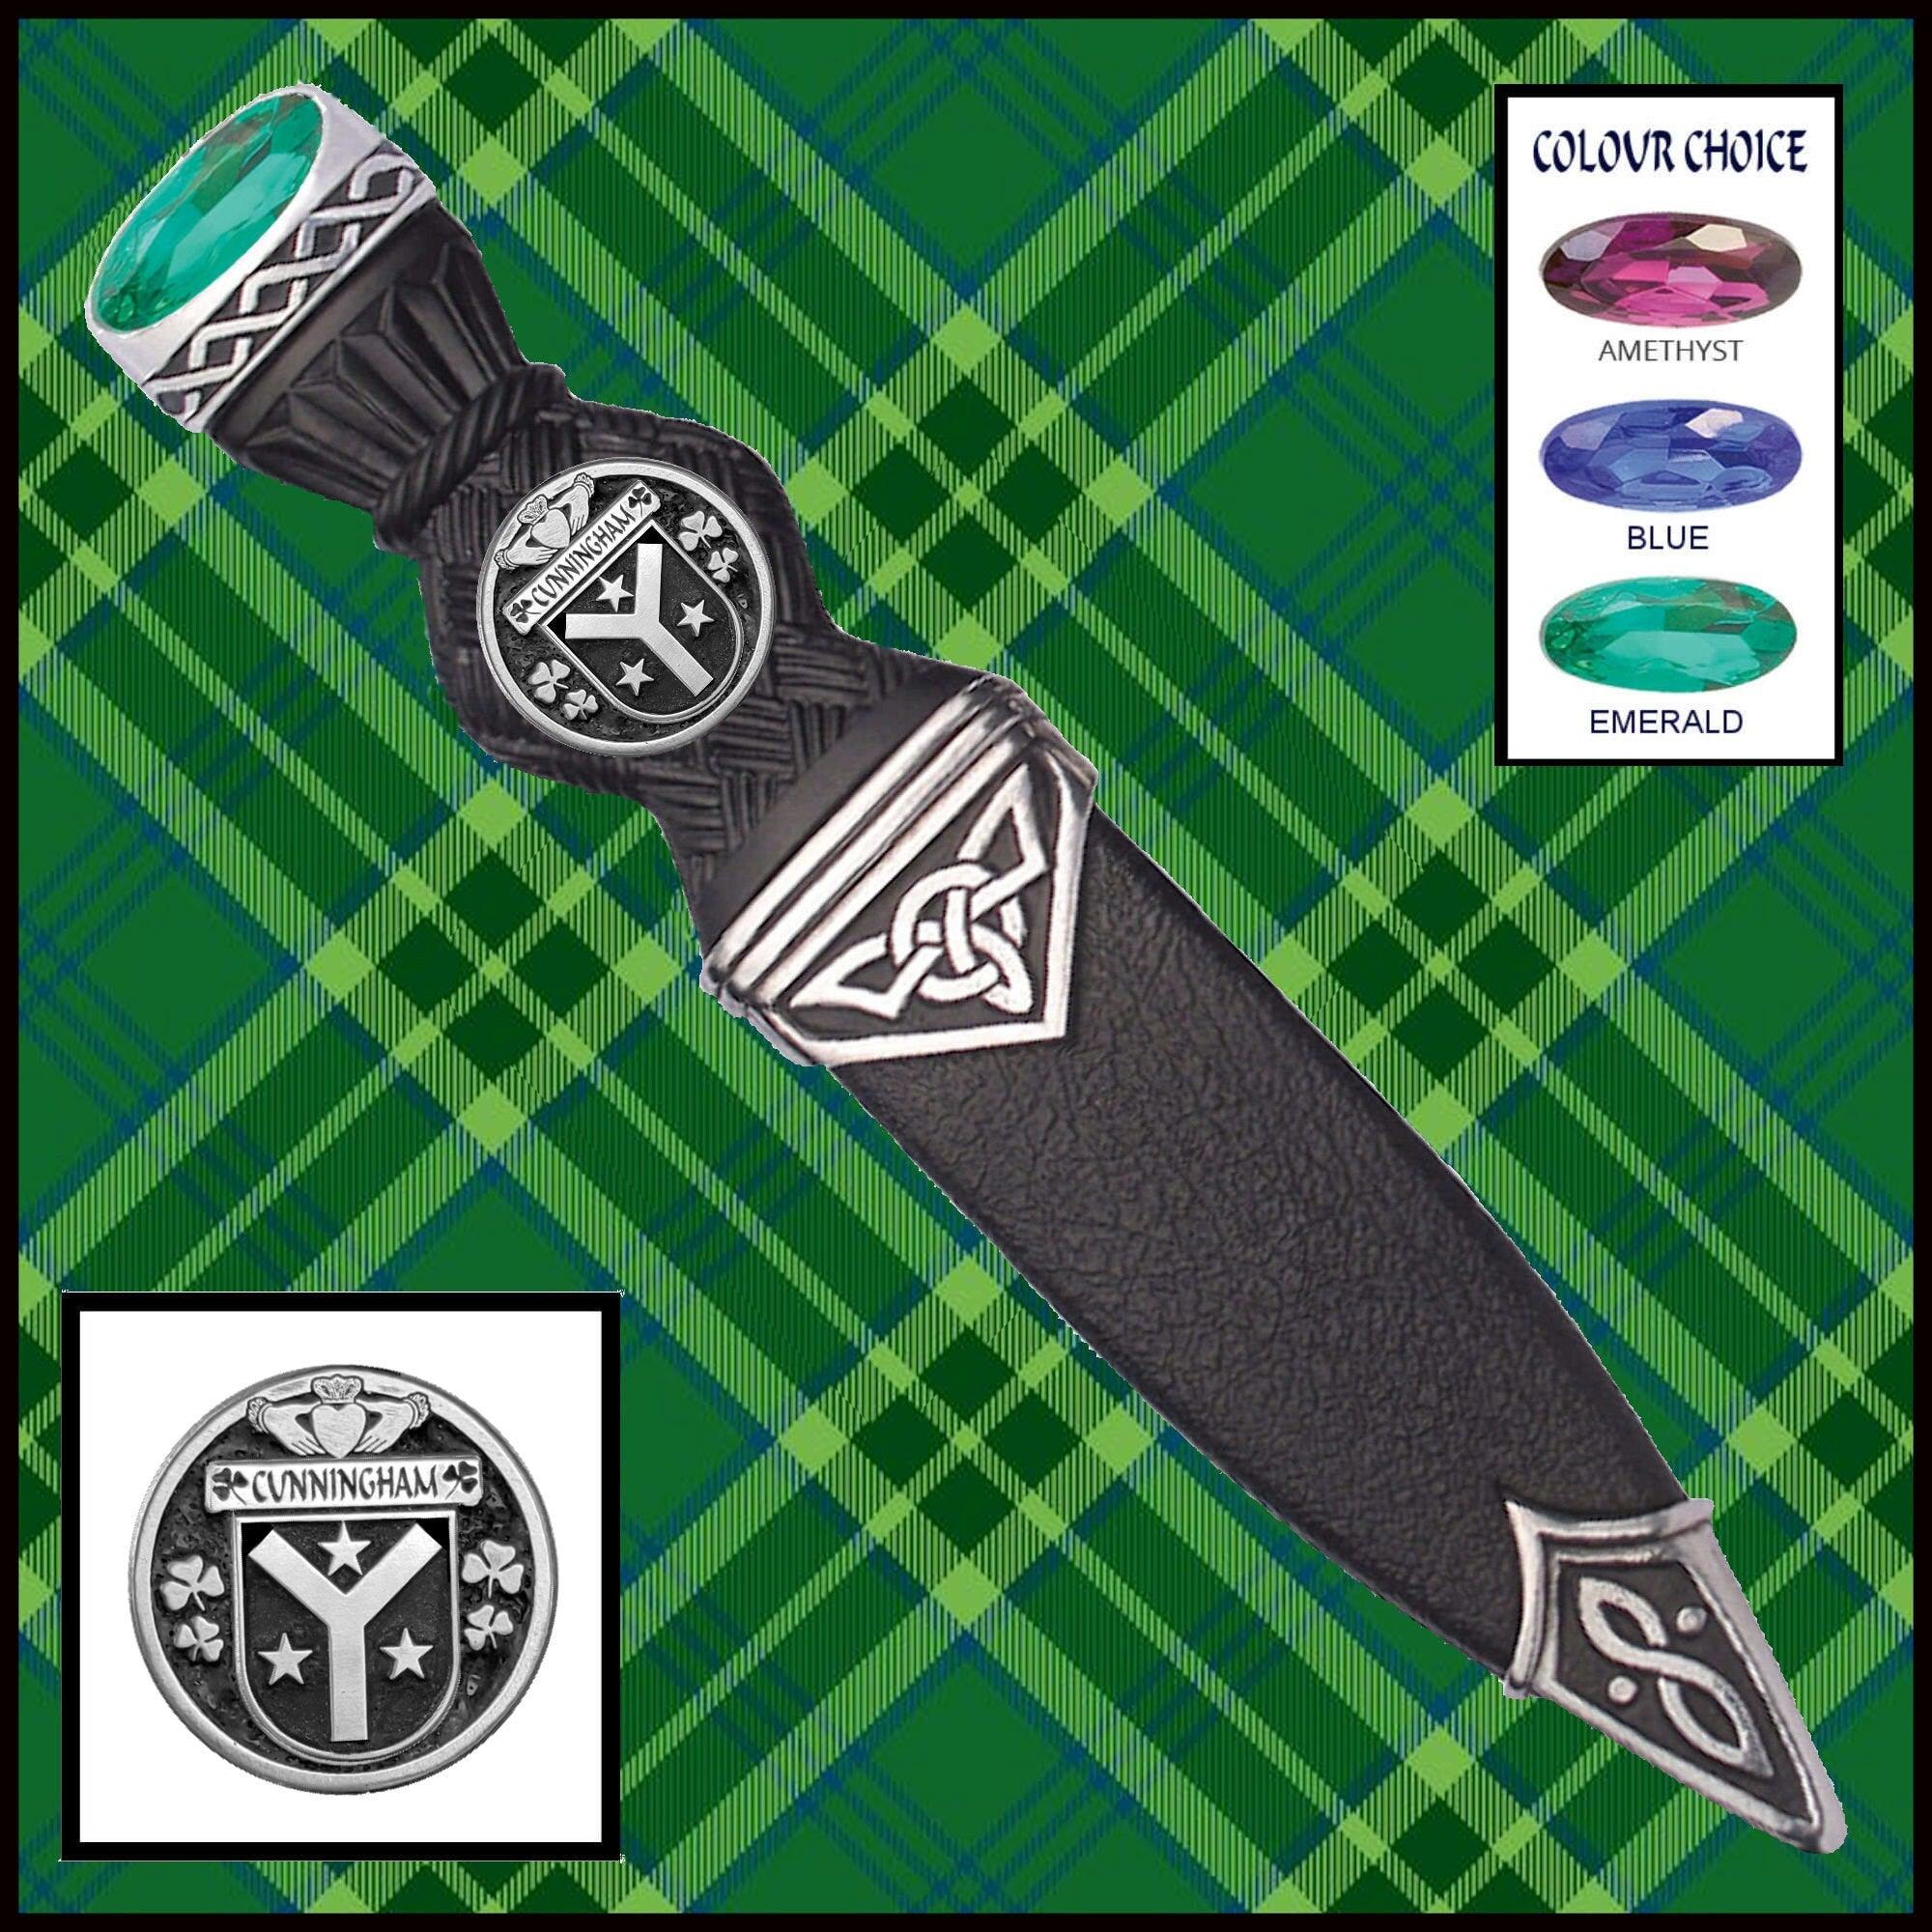 Cunningham Interlace Irish Disk Coat of Arms Sgian Dubh, Irish Knife ~ ISDCO